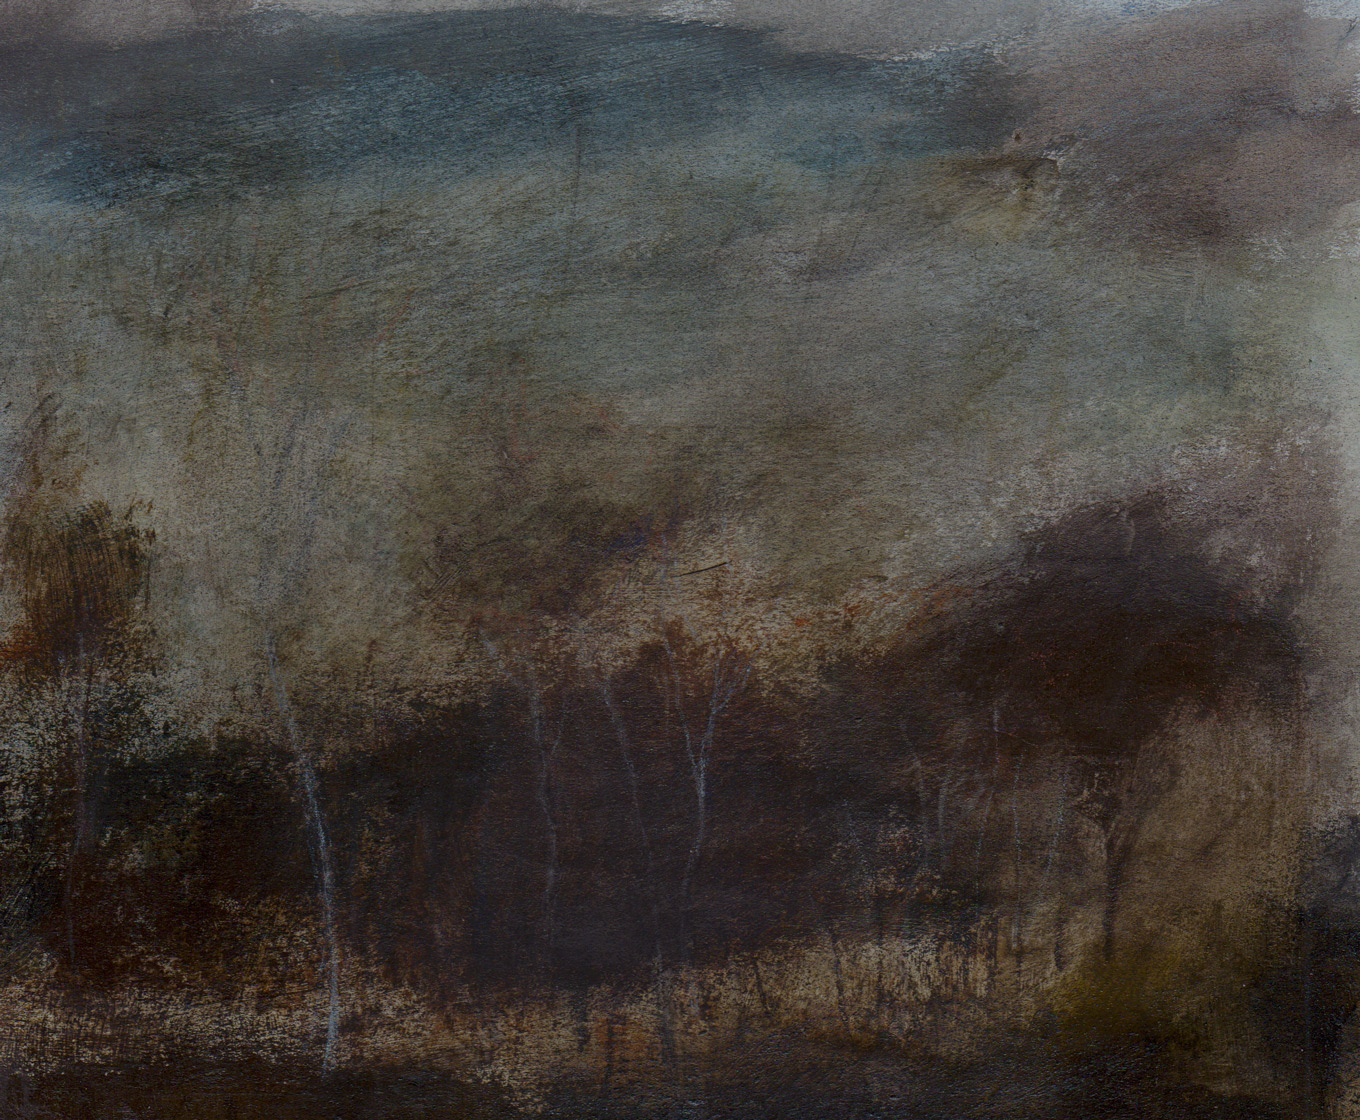 L1207 - Nicholas Herbert, British Artist, mixed media landscape painting of Chobham Common, mixed media on paper,2020